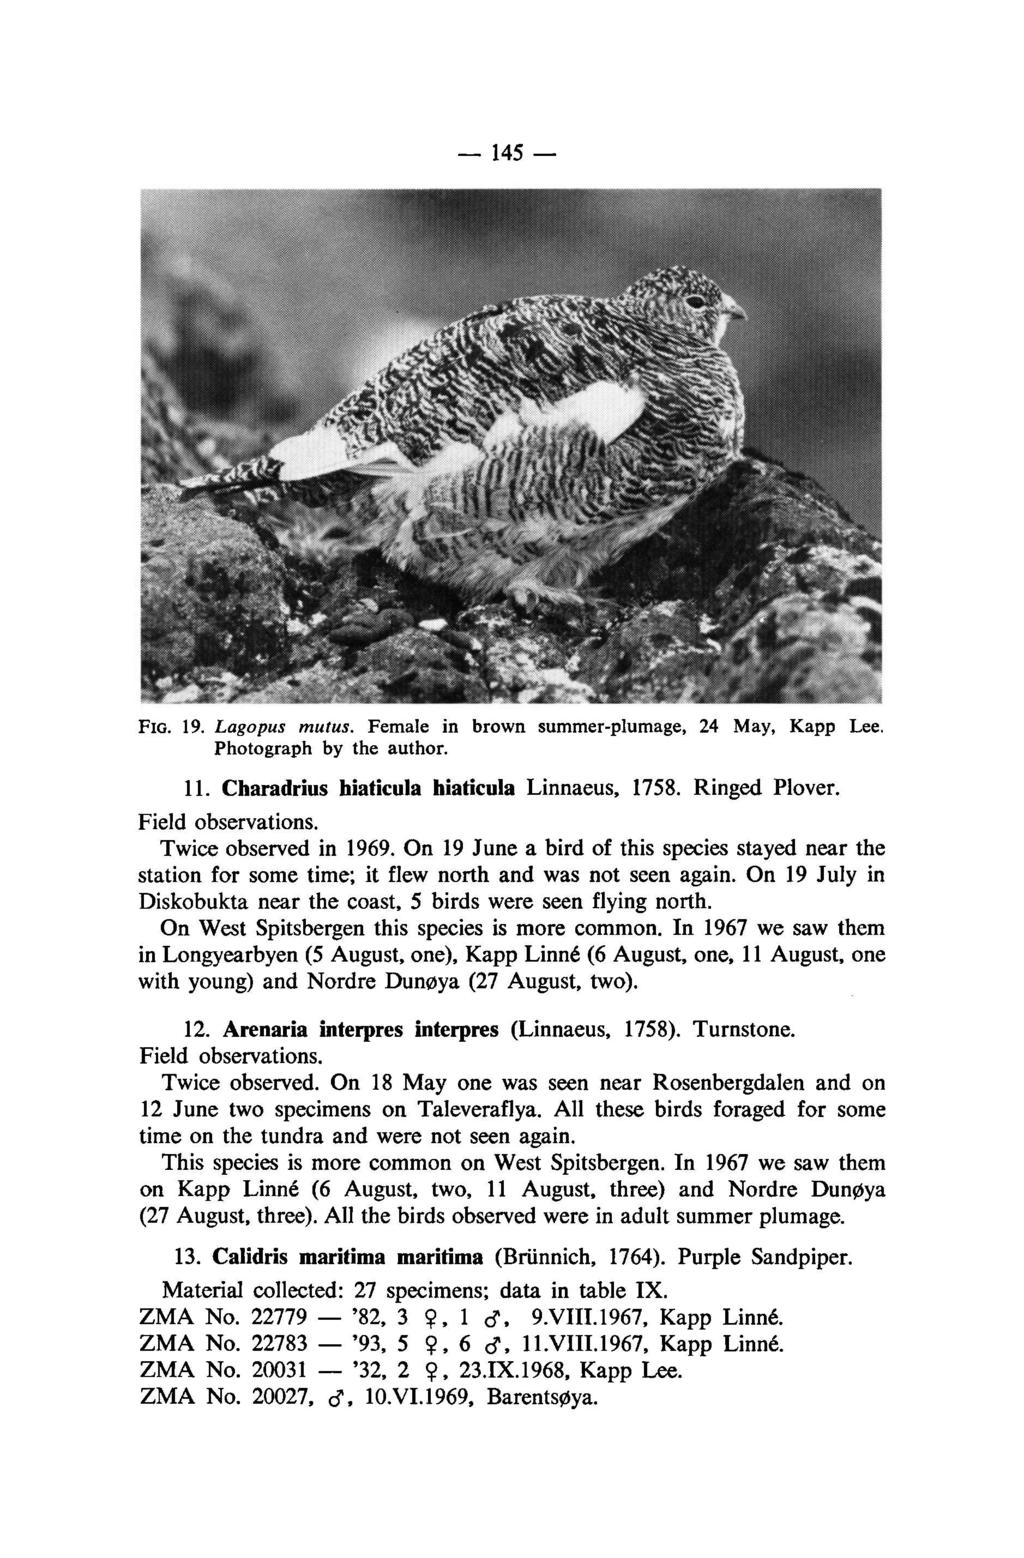 '82, '93, '32, 145 FIG. 19. Lagopus mutus. Female in brown summer-plumage, 24 May, Kapp Lee. Photograph by the author. 11. Charadrius hiaticula hiaticula Linnaeus, 1758.